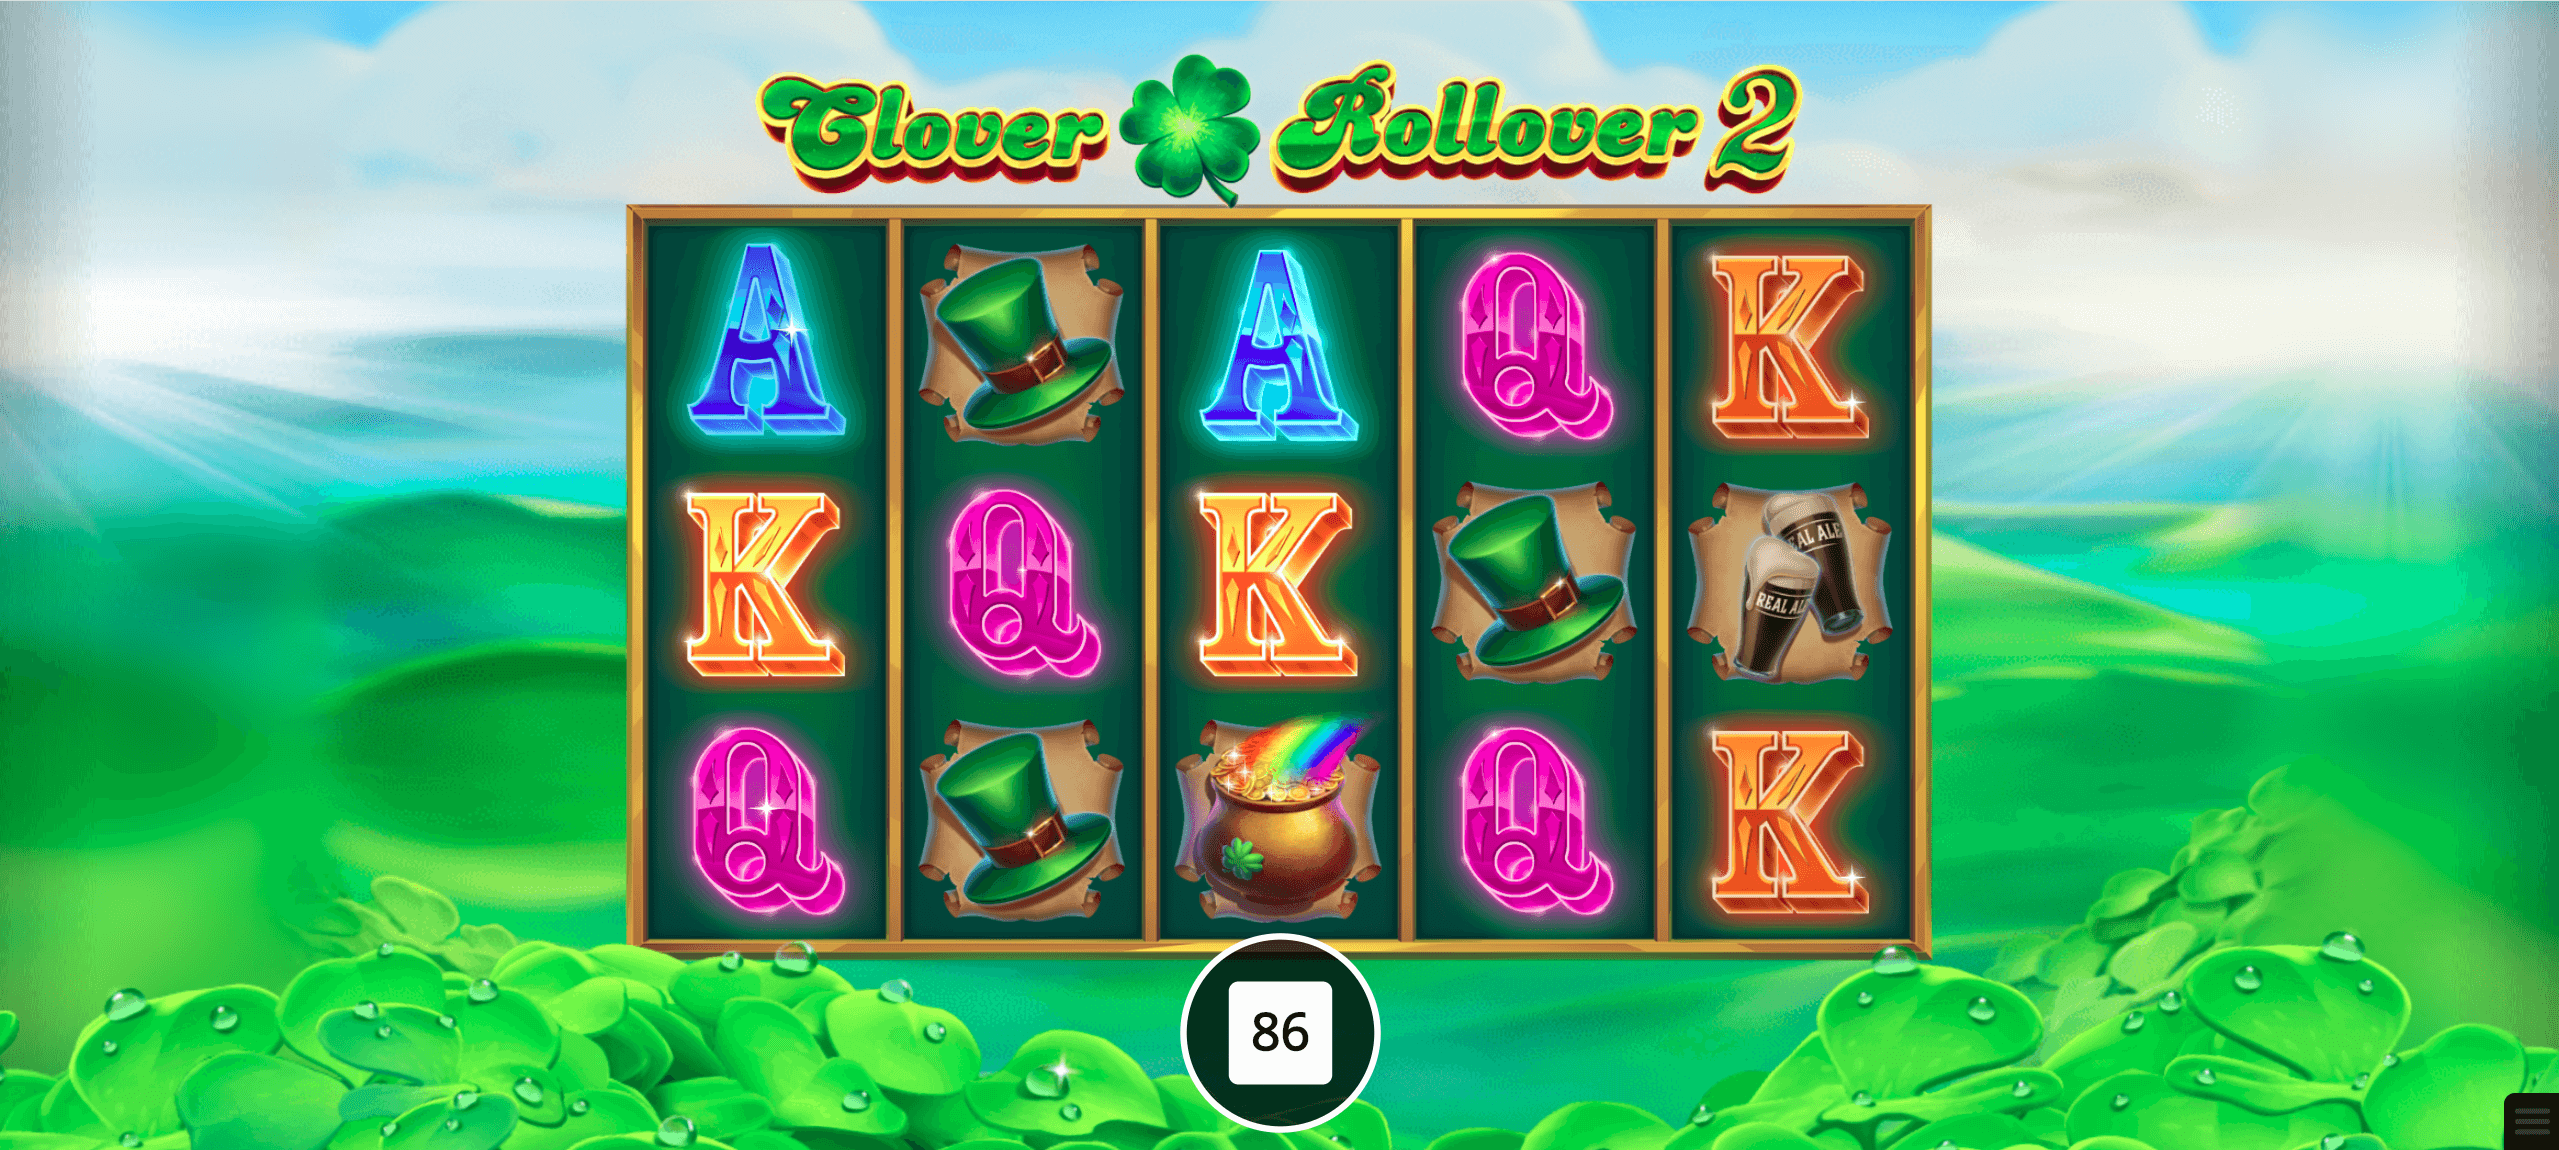 Play Clover Rollover 2 Slot | 50 Free Spins | PlayOJO